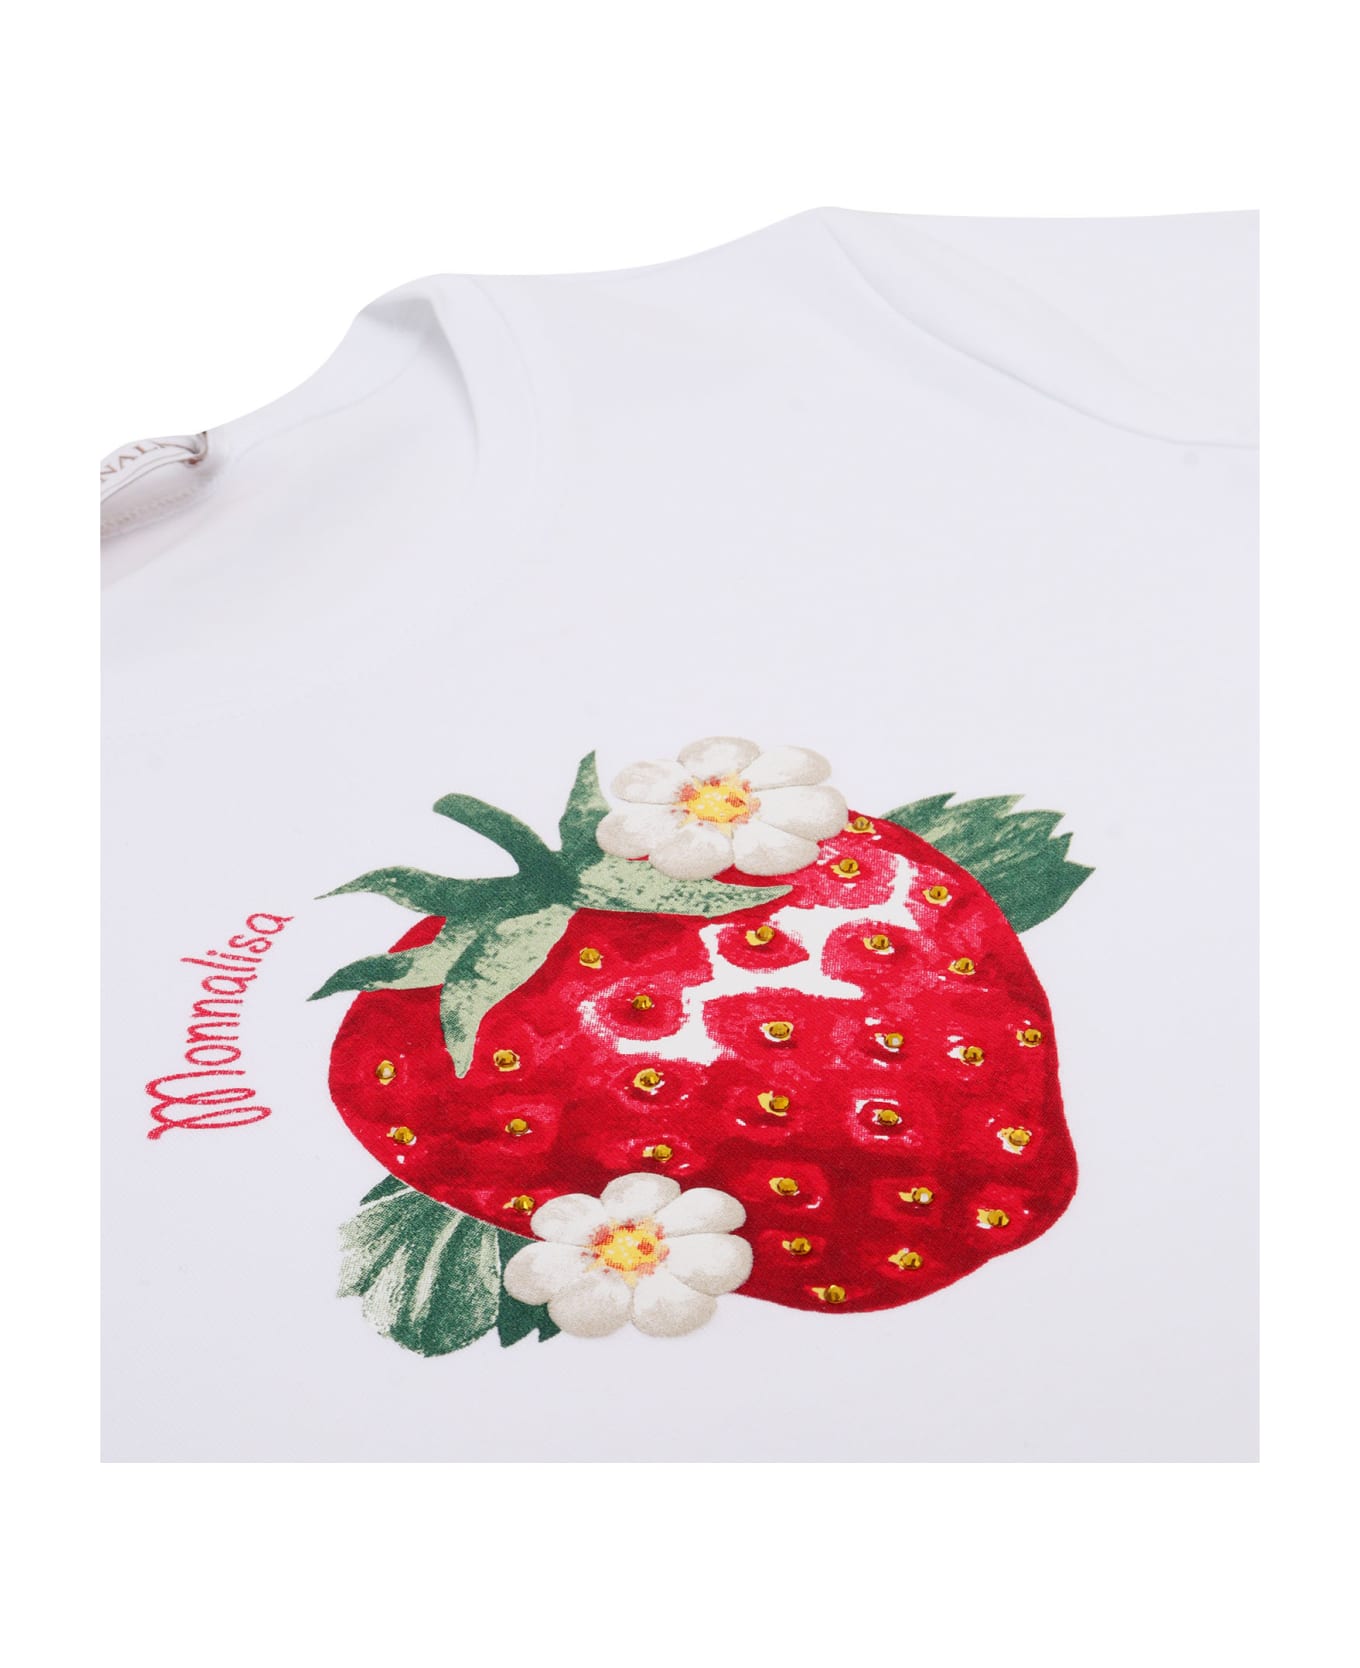 Monnalisa White T-shirt With Strawberry Pattern - WHITE Tシャツ＆ポロシャツ